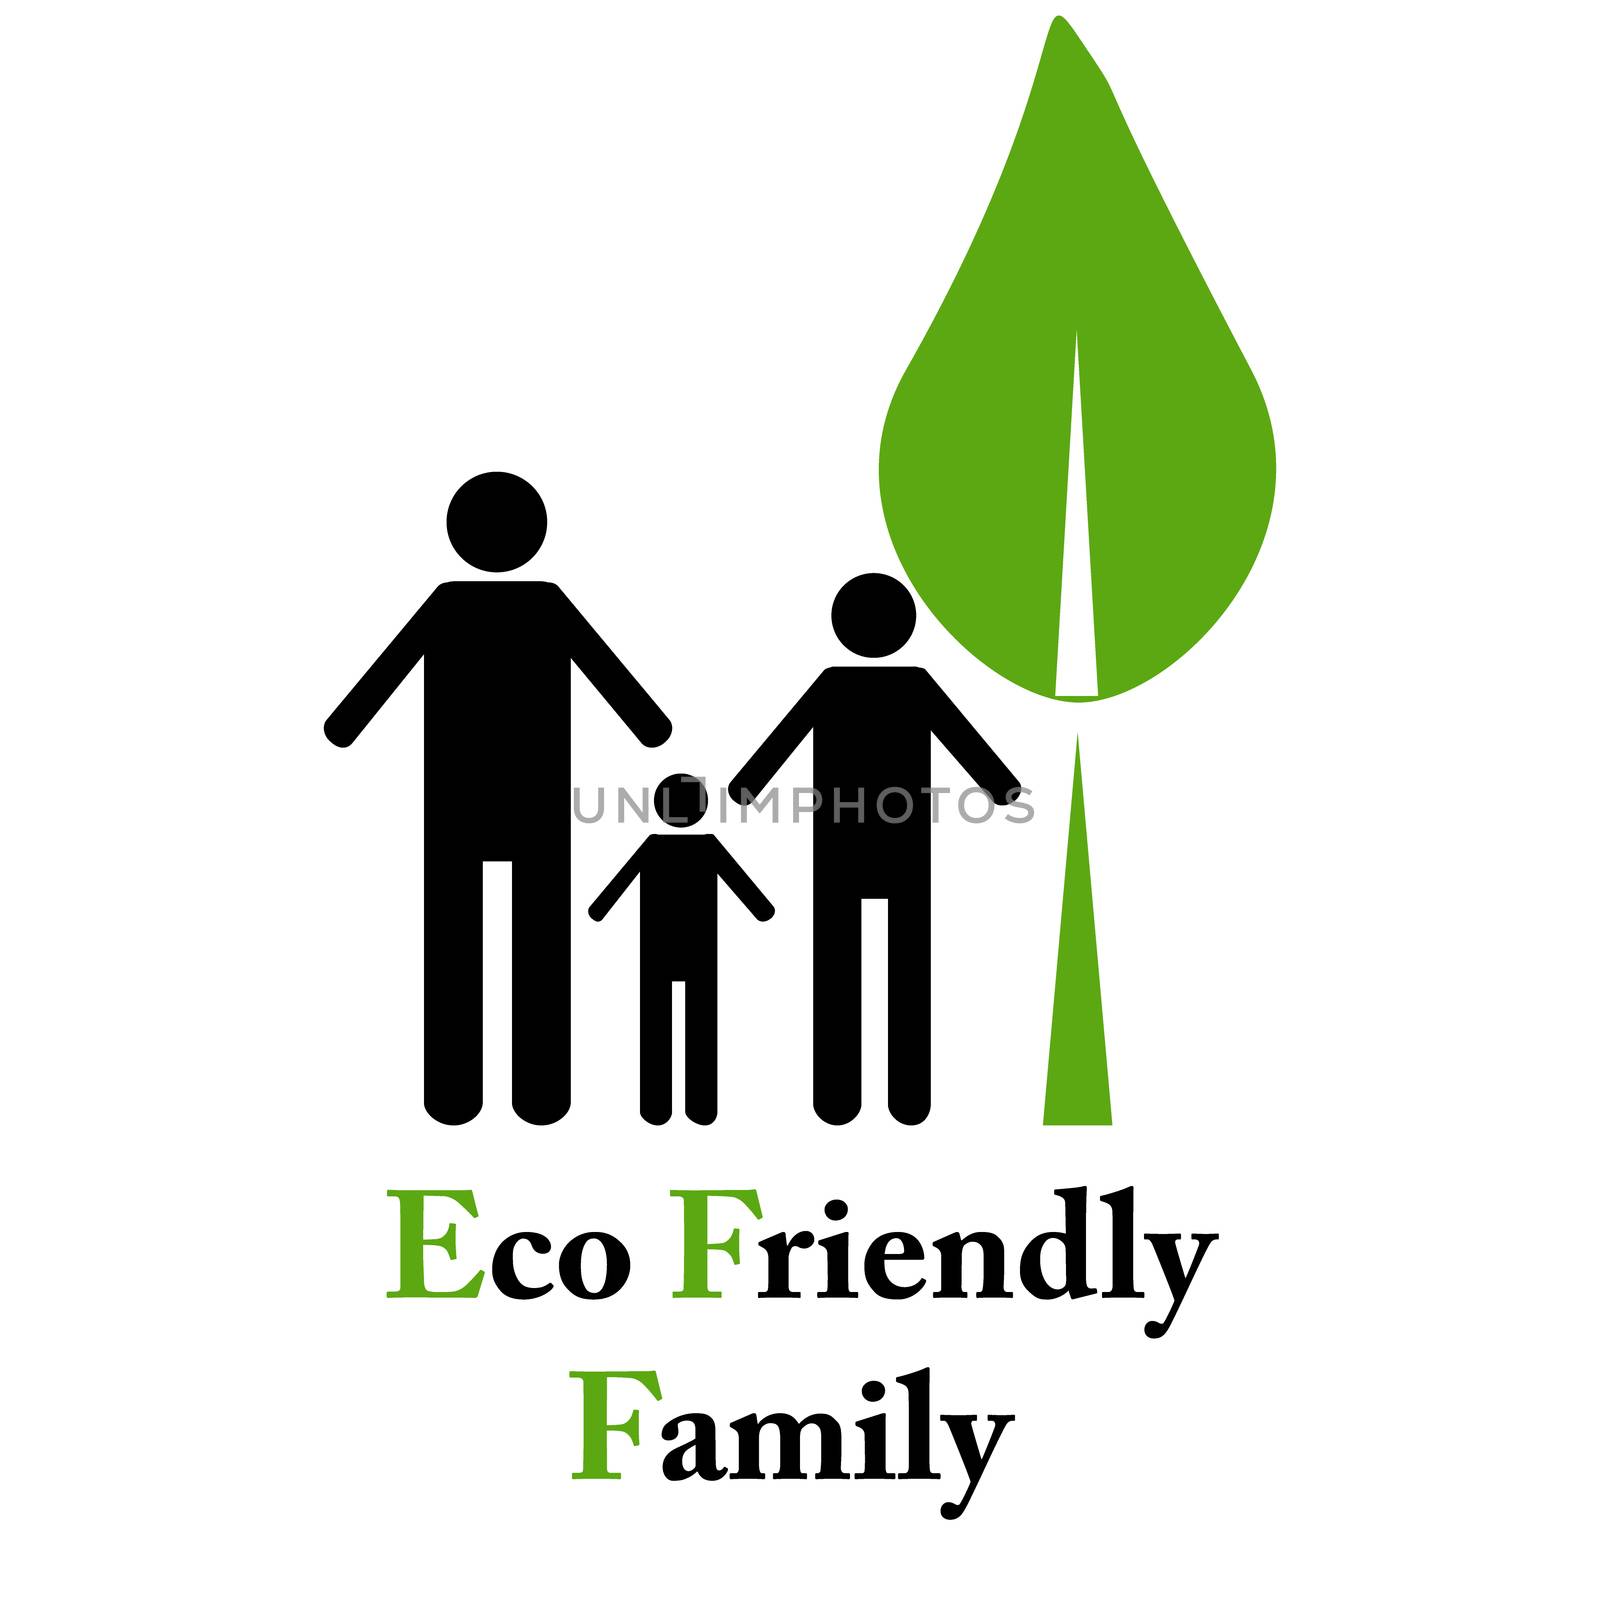 Eco friendly family emblem on white background